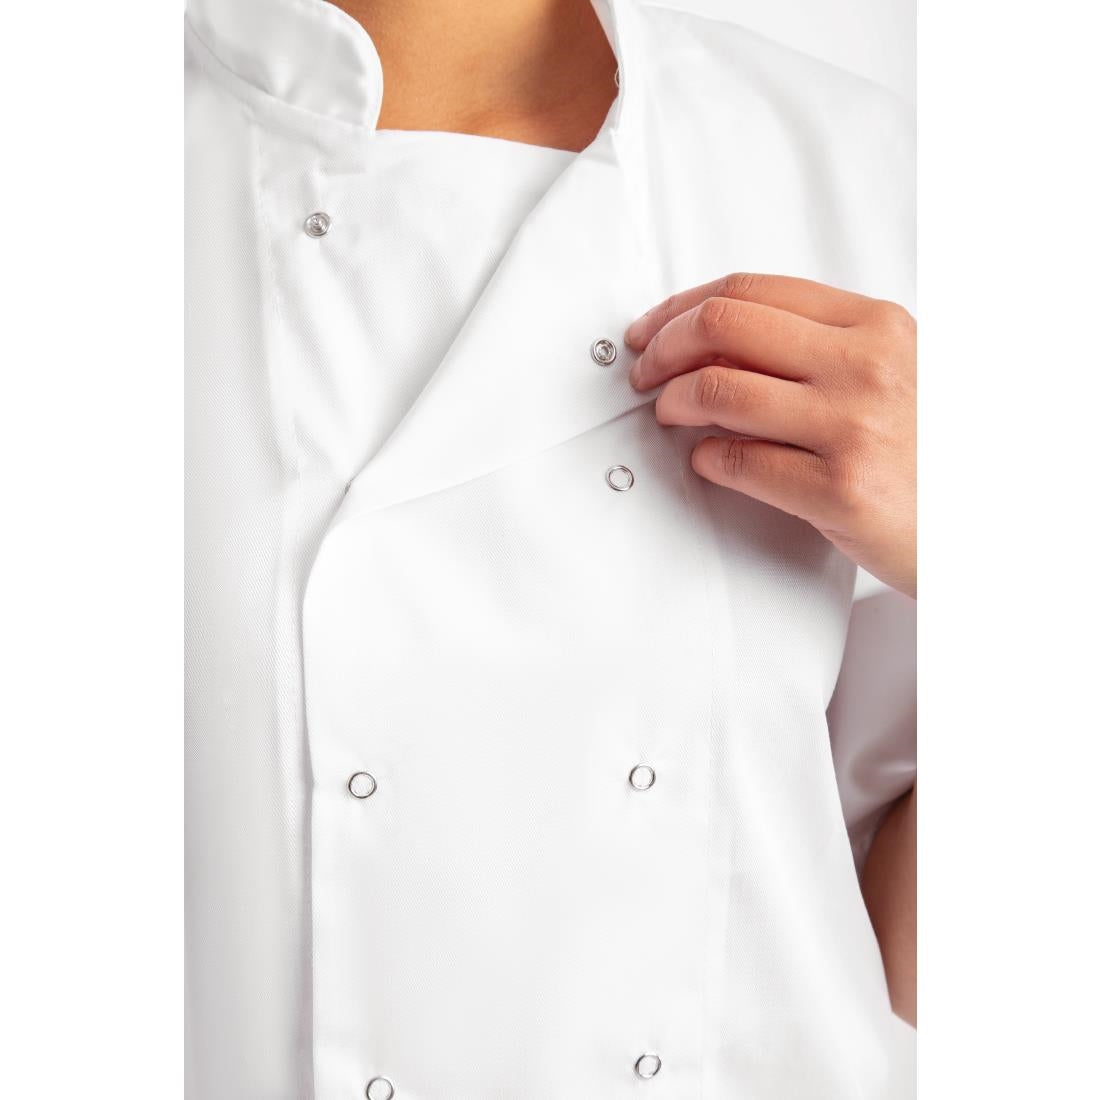 B250-XXL Whites Boston Unisex Short Sleeve Chefs Jacket White 2XL JD Catering Equipment Solutions Ltd